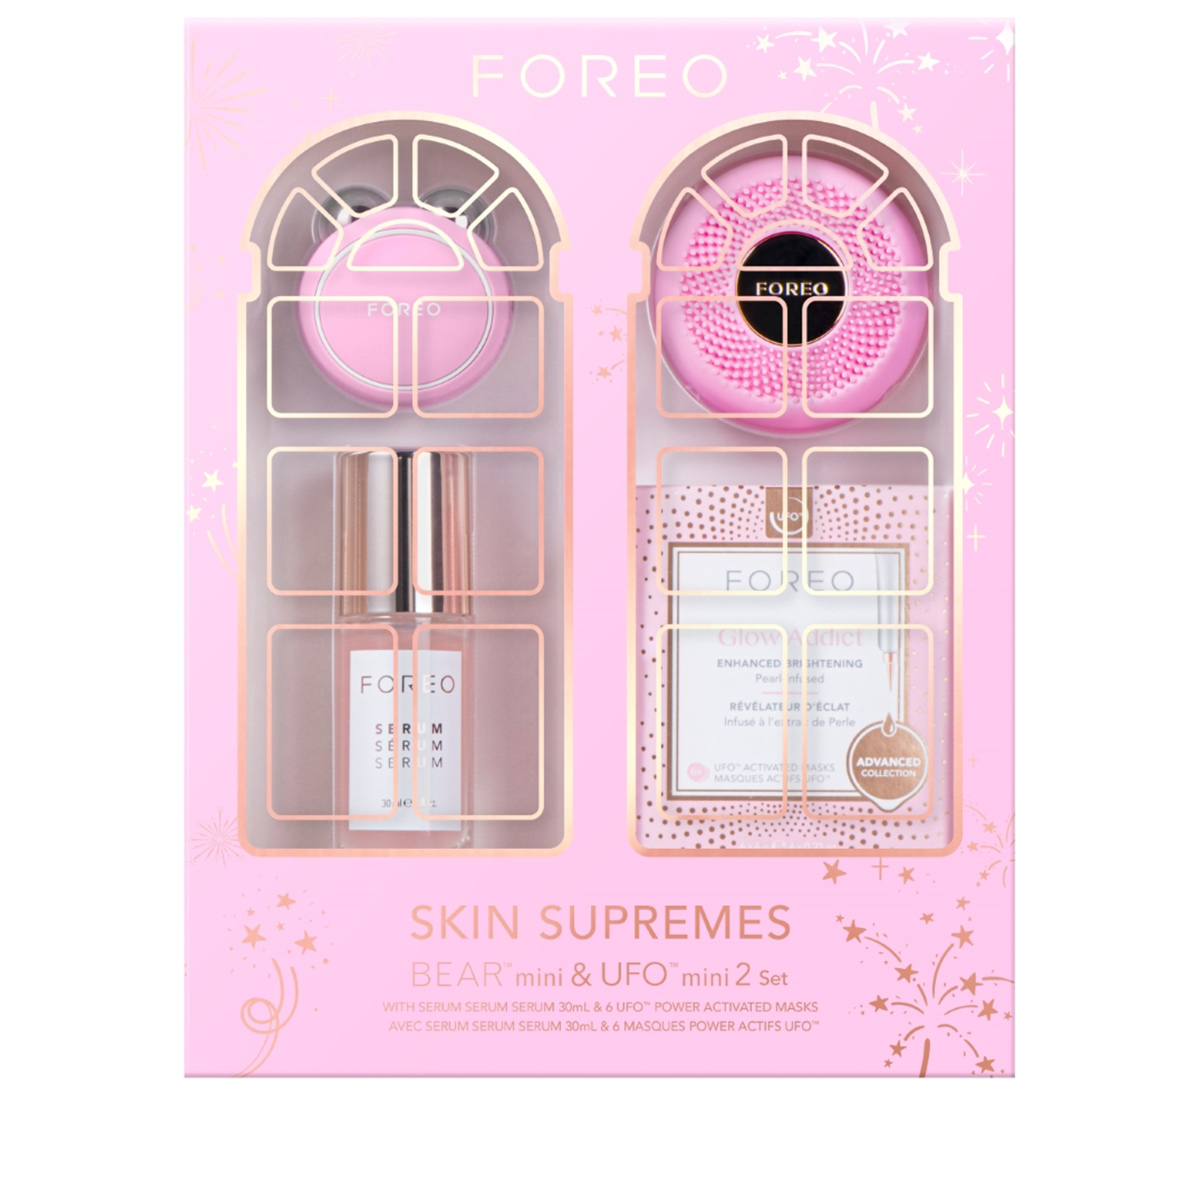 Foreo • Skin Supremes 2022 - Bear mini & Ufo mini 2 Set •